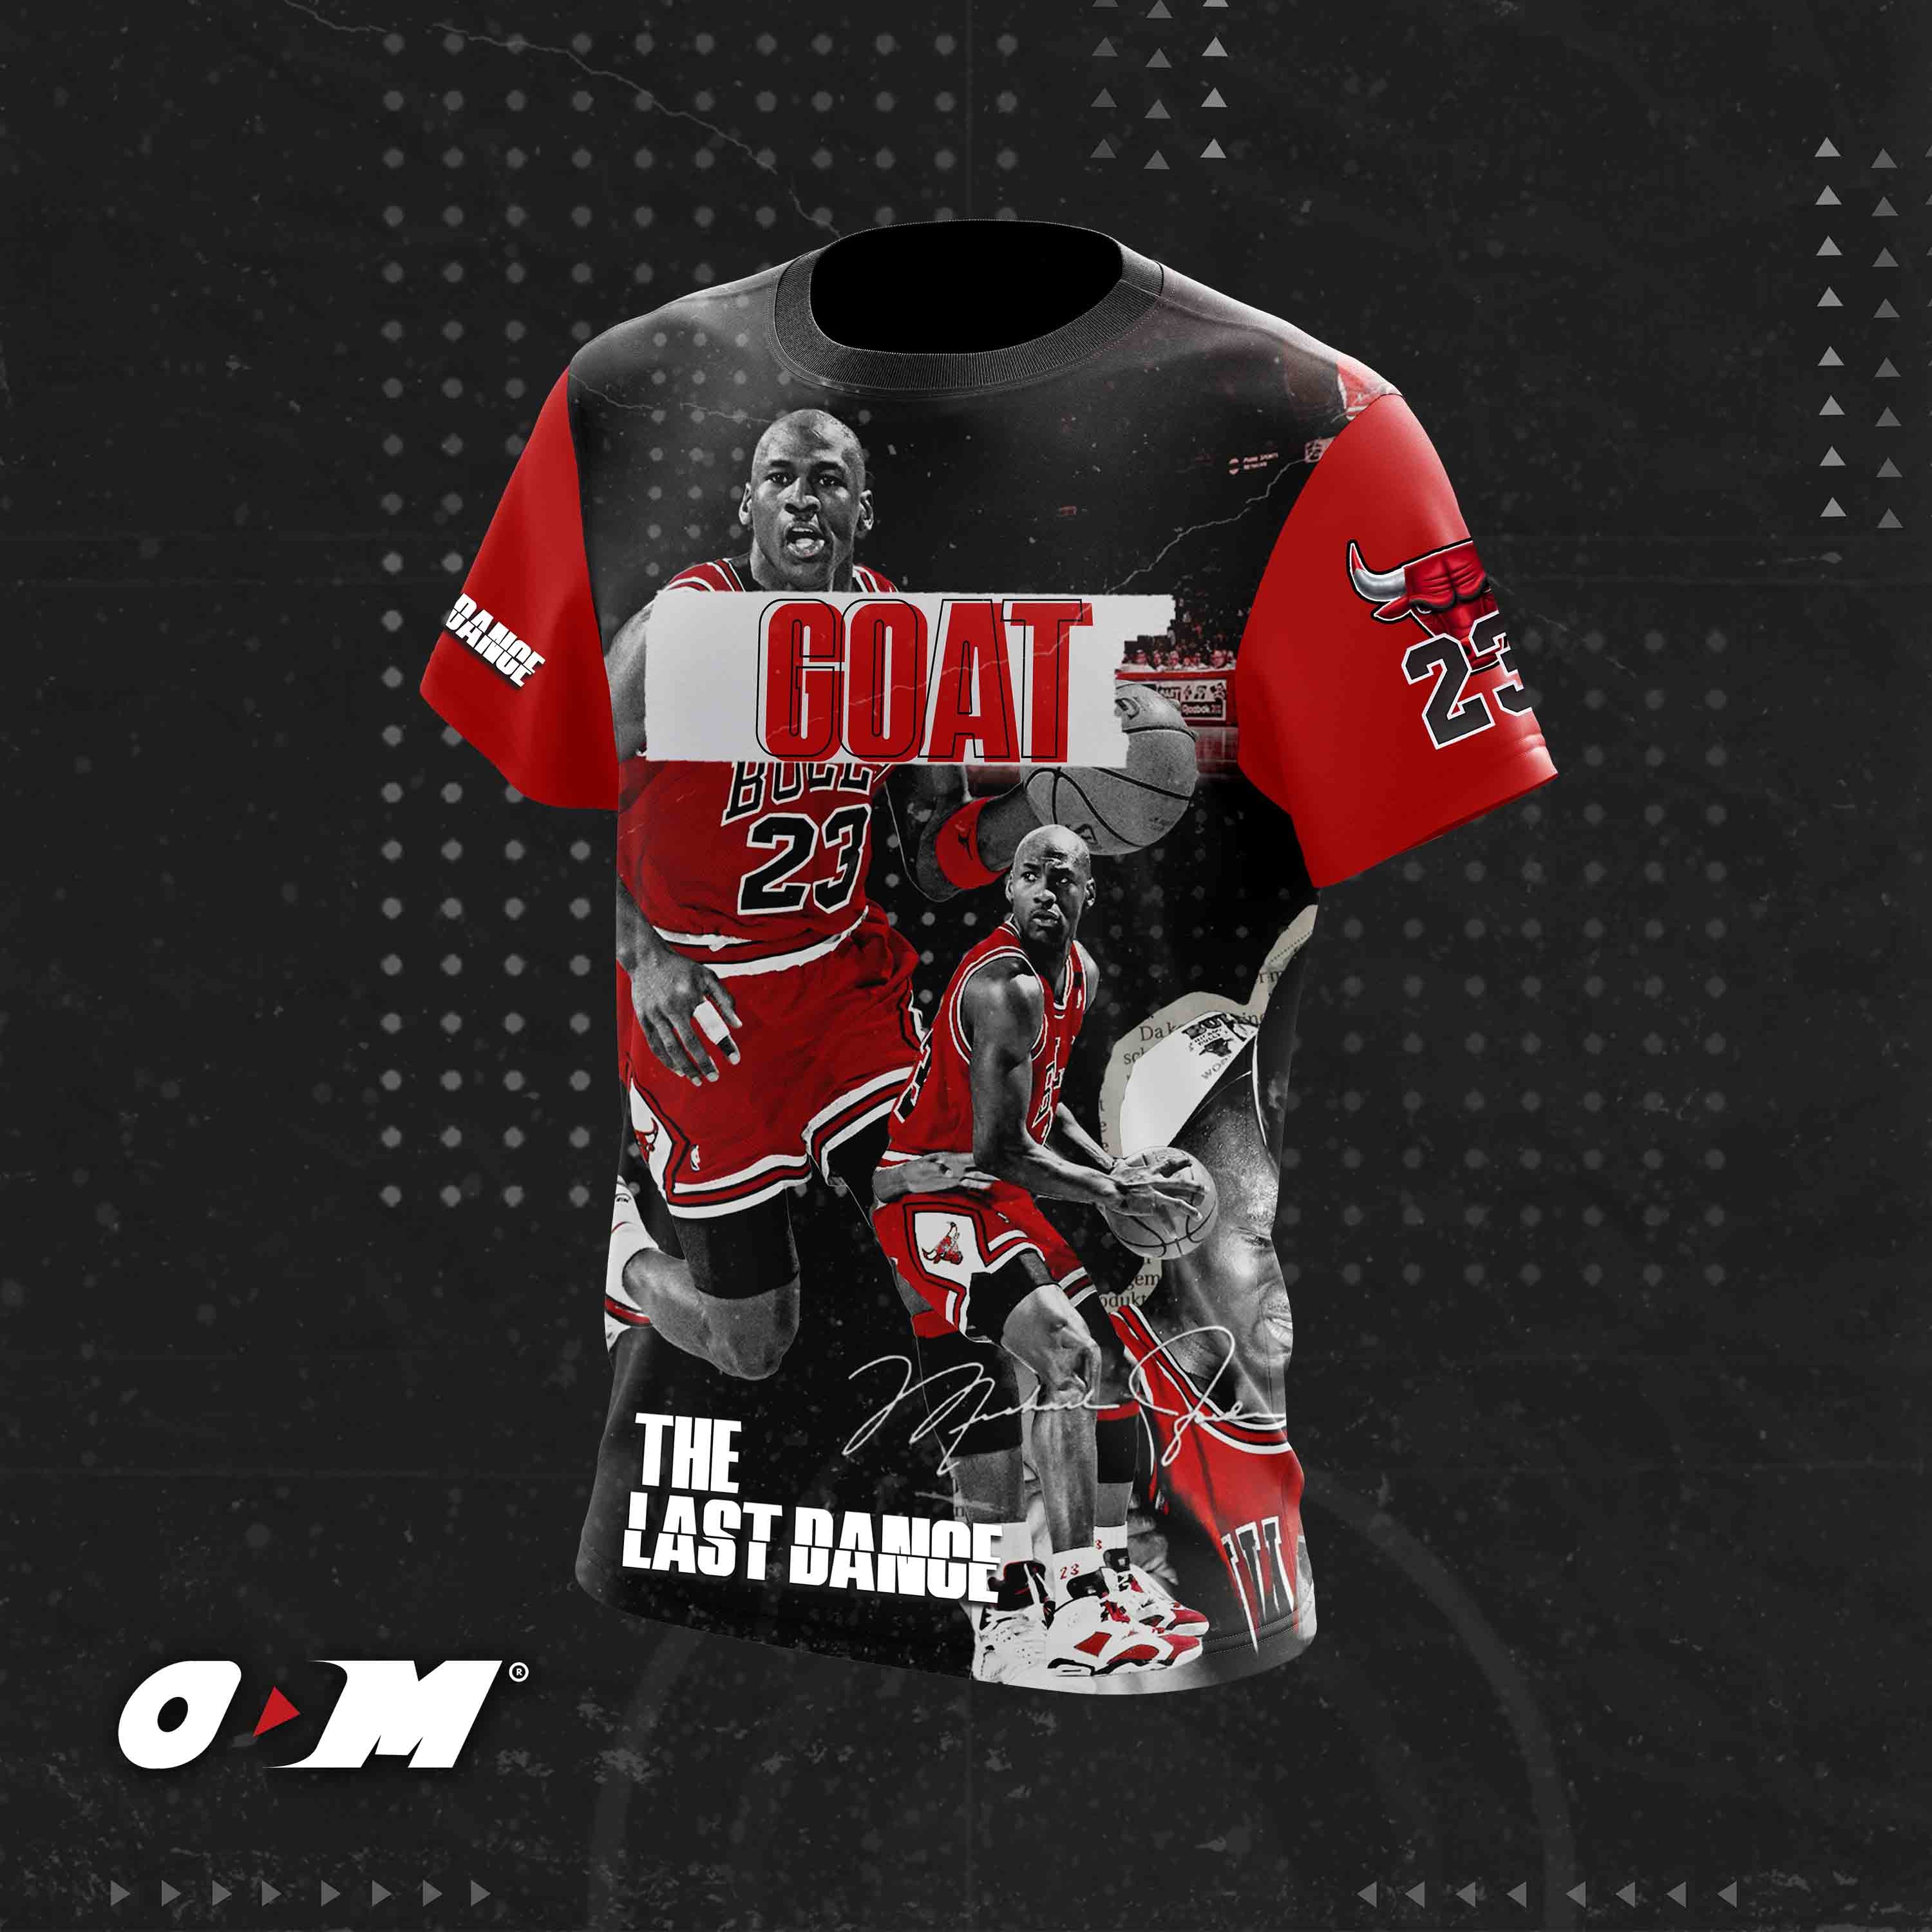 Michael Jordan "Goat" Shirt